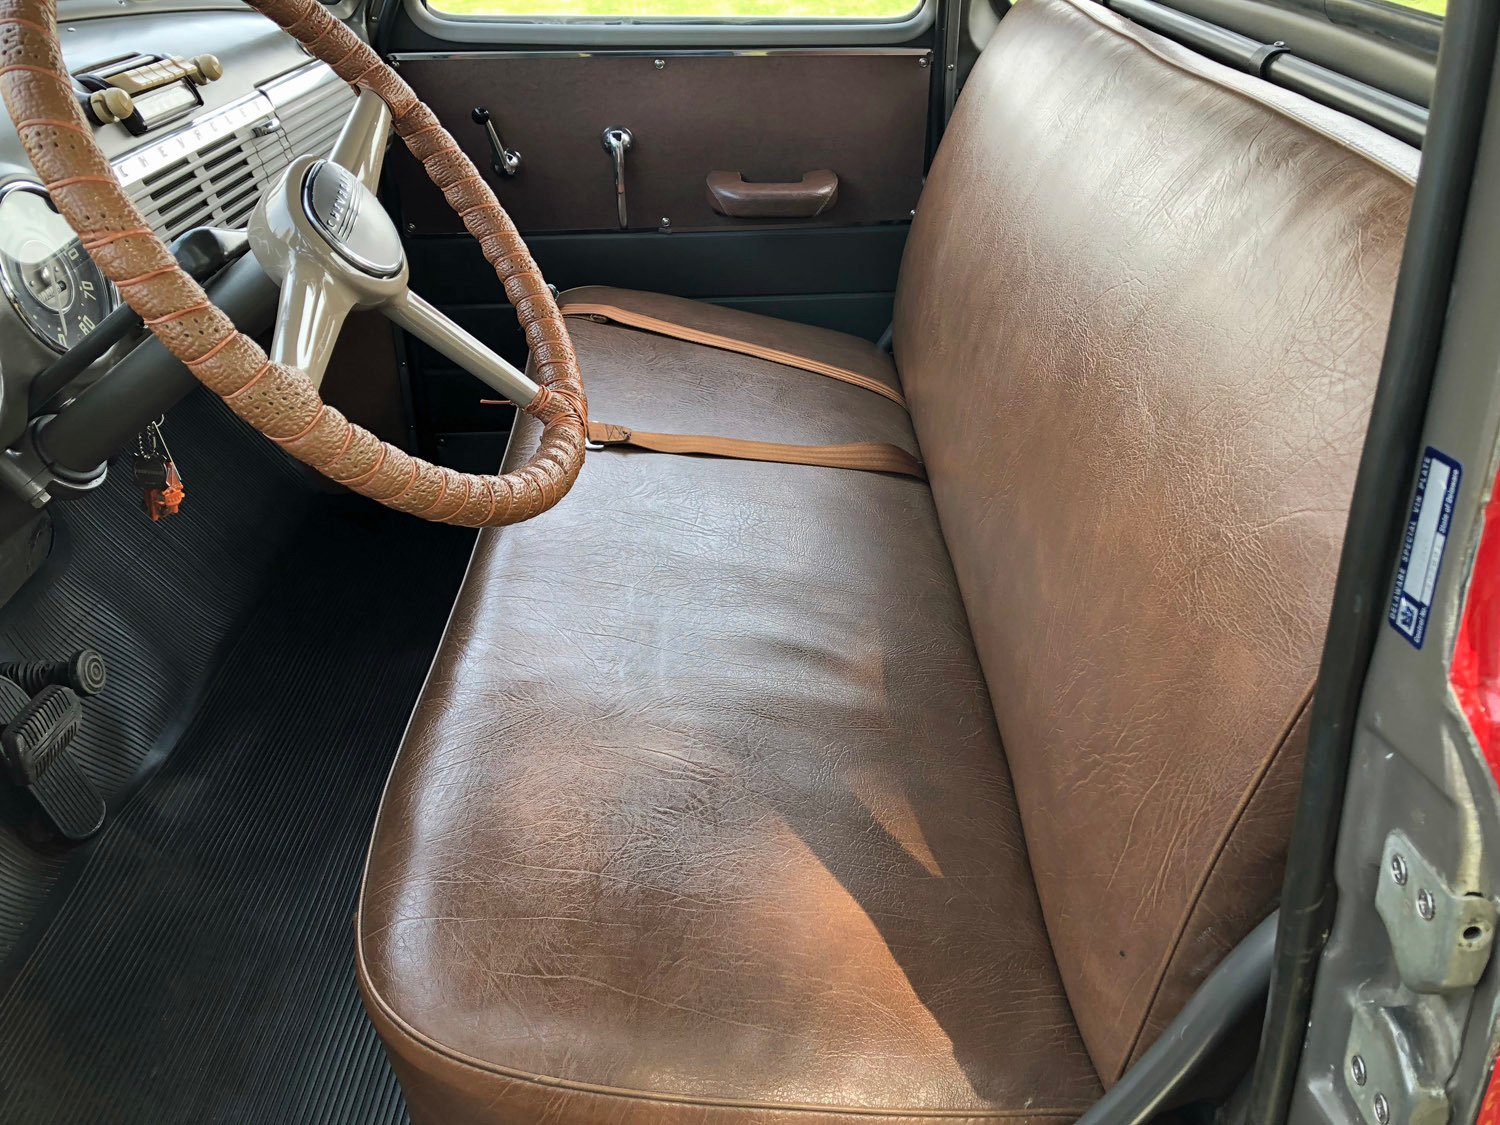 1949 Chevrolet 1/2-Ton Pickup